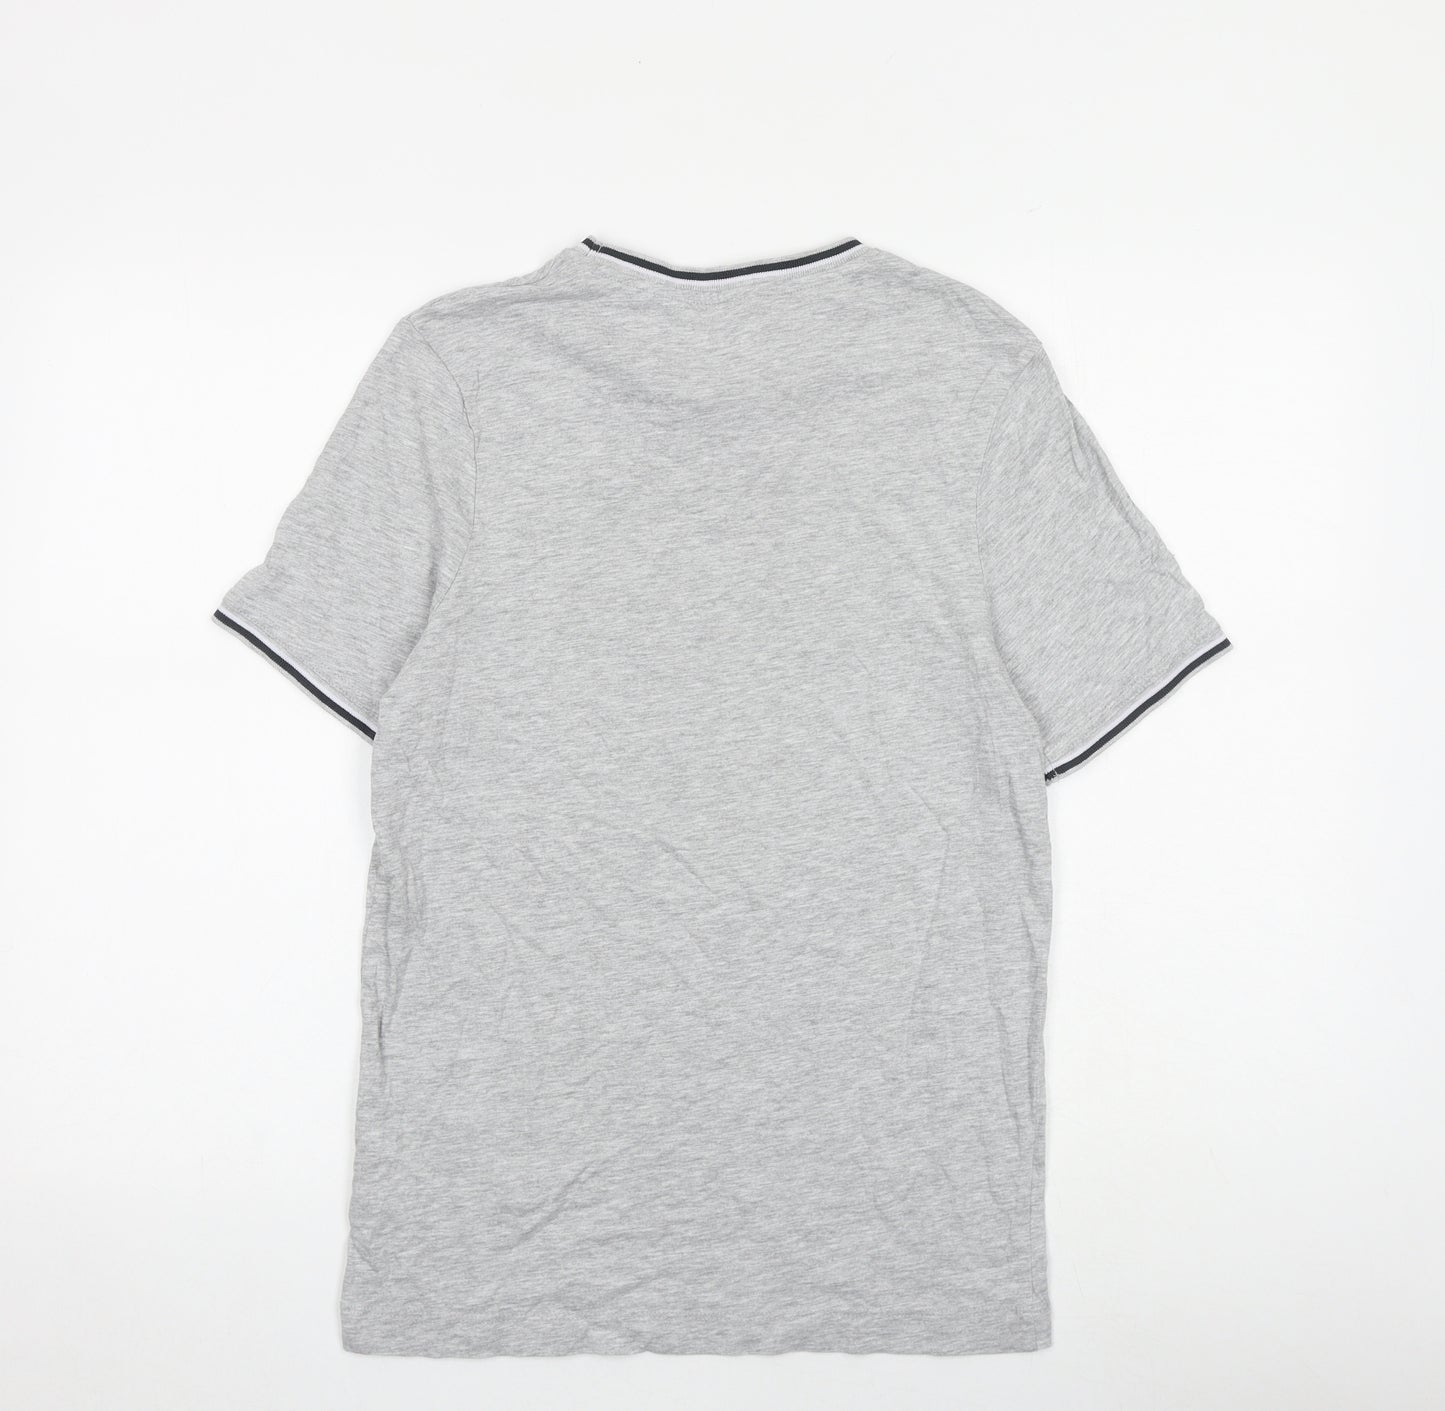 Slazenger Mens Grey Cotton T-Shirt Size XS Round Neck